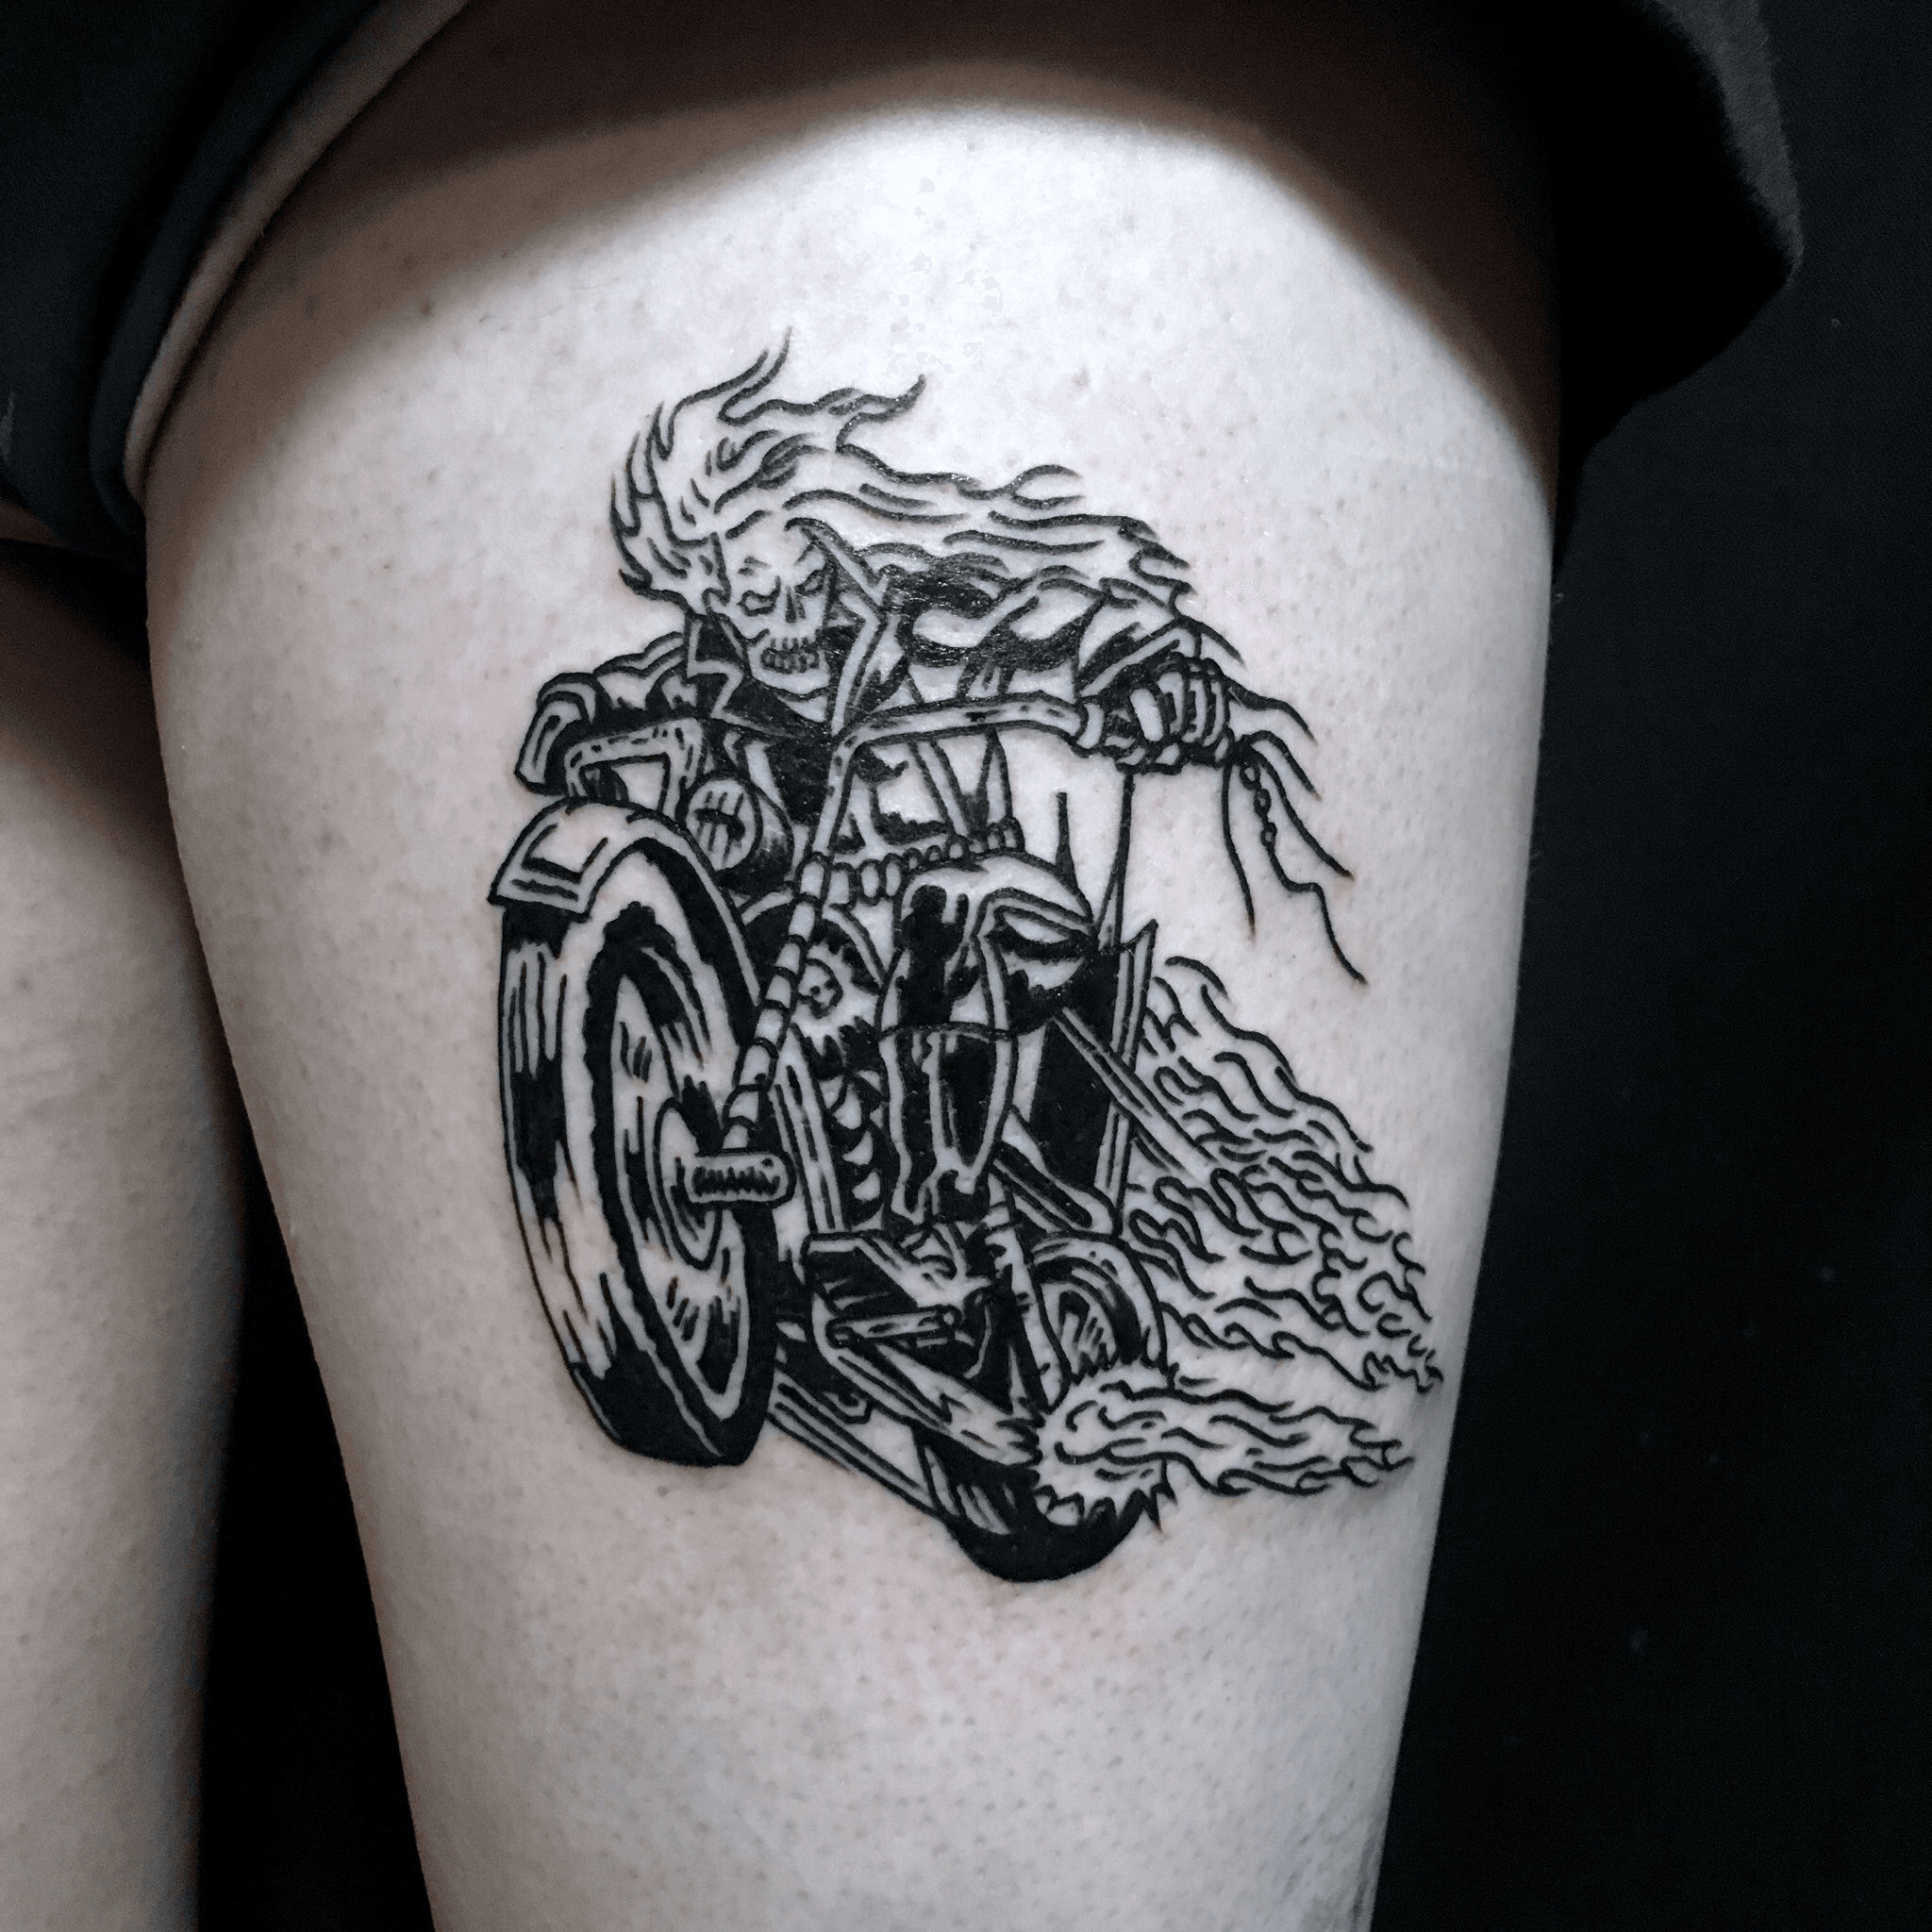 Ghost rider tattoo fin by 2FaceTattoo on DeviantArt